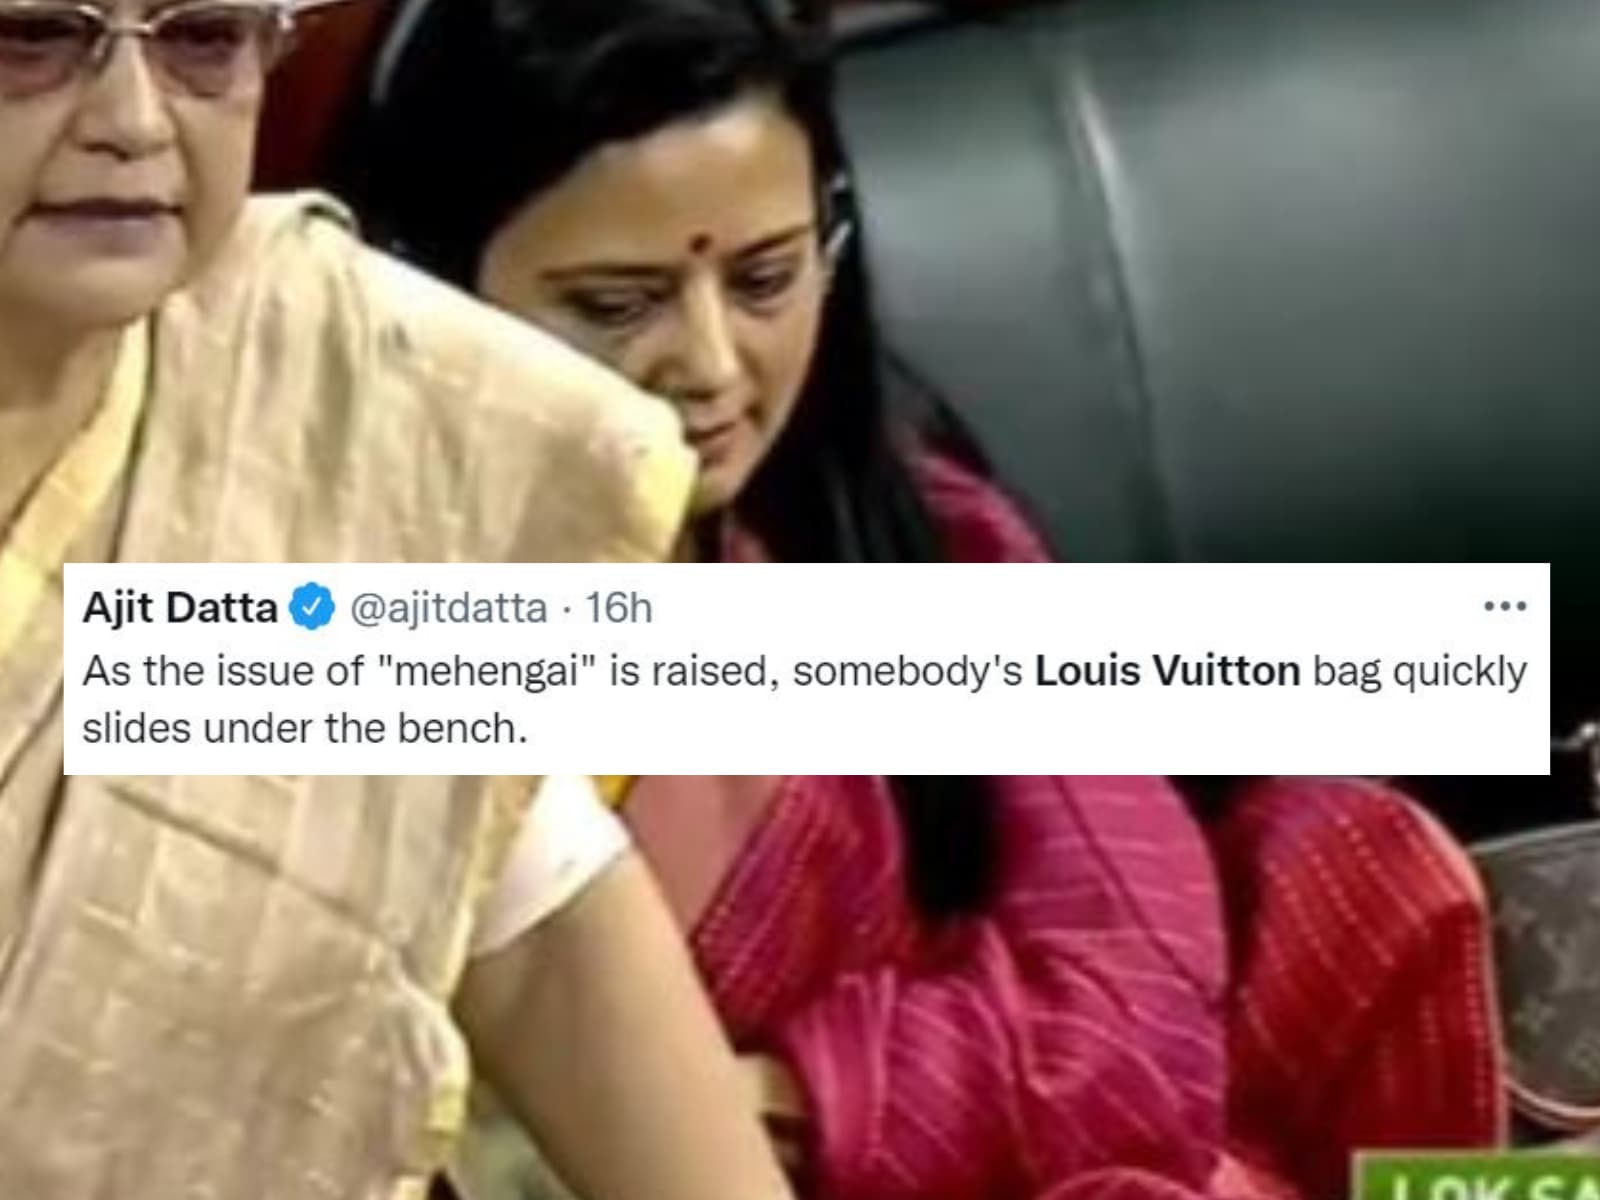 Irrelevant nonsense': Mahua Moitra replies to critics, social media trolls  after Louis Vuitton brouhaha